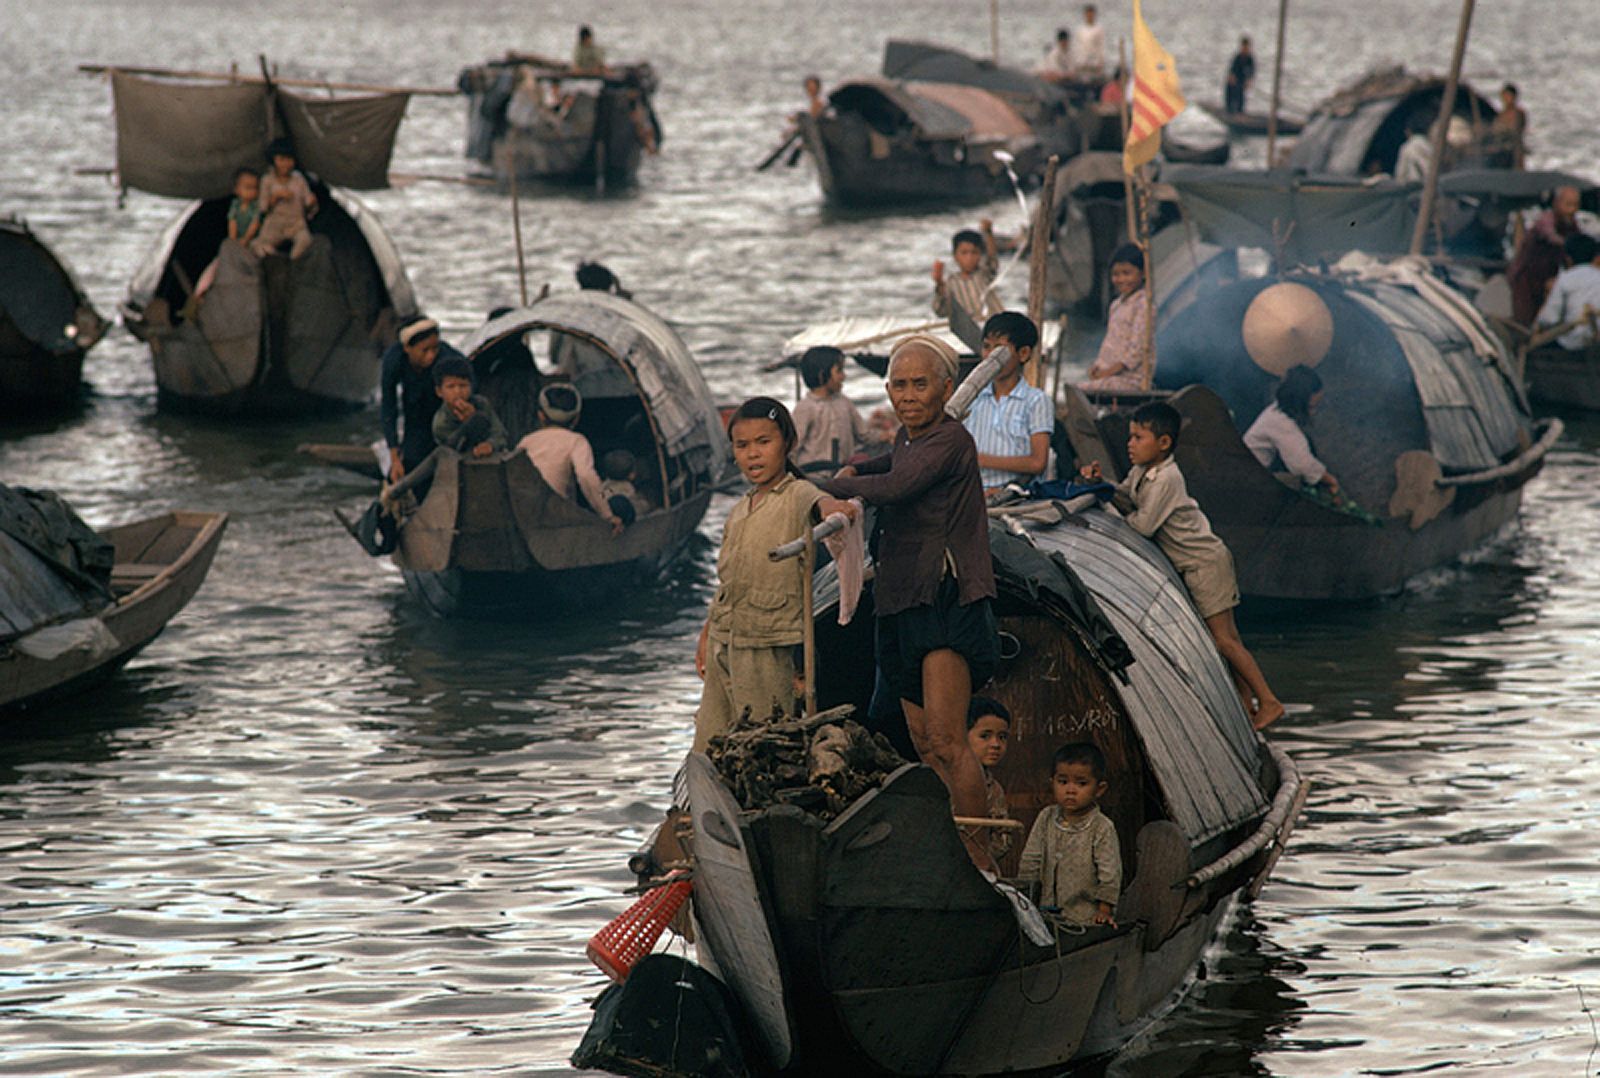 Vietnamese migrants in small boats at sea